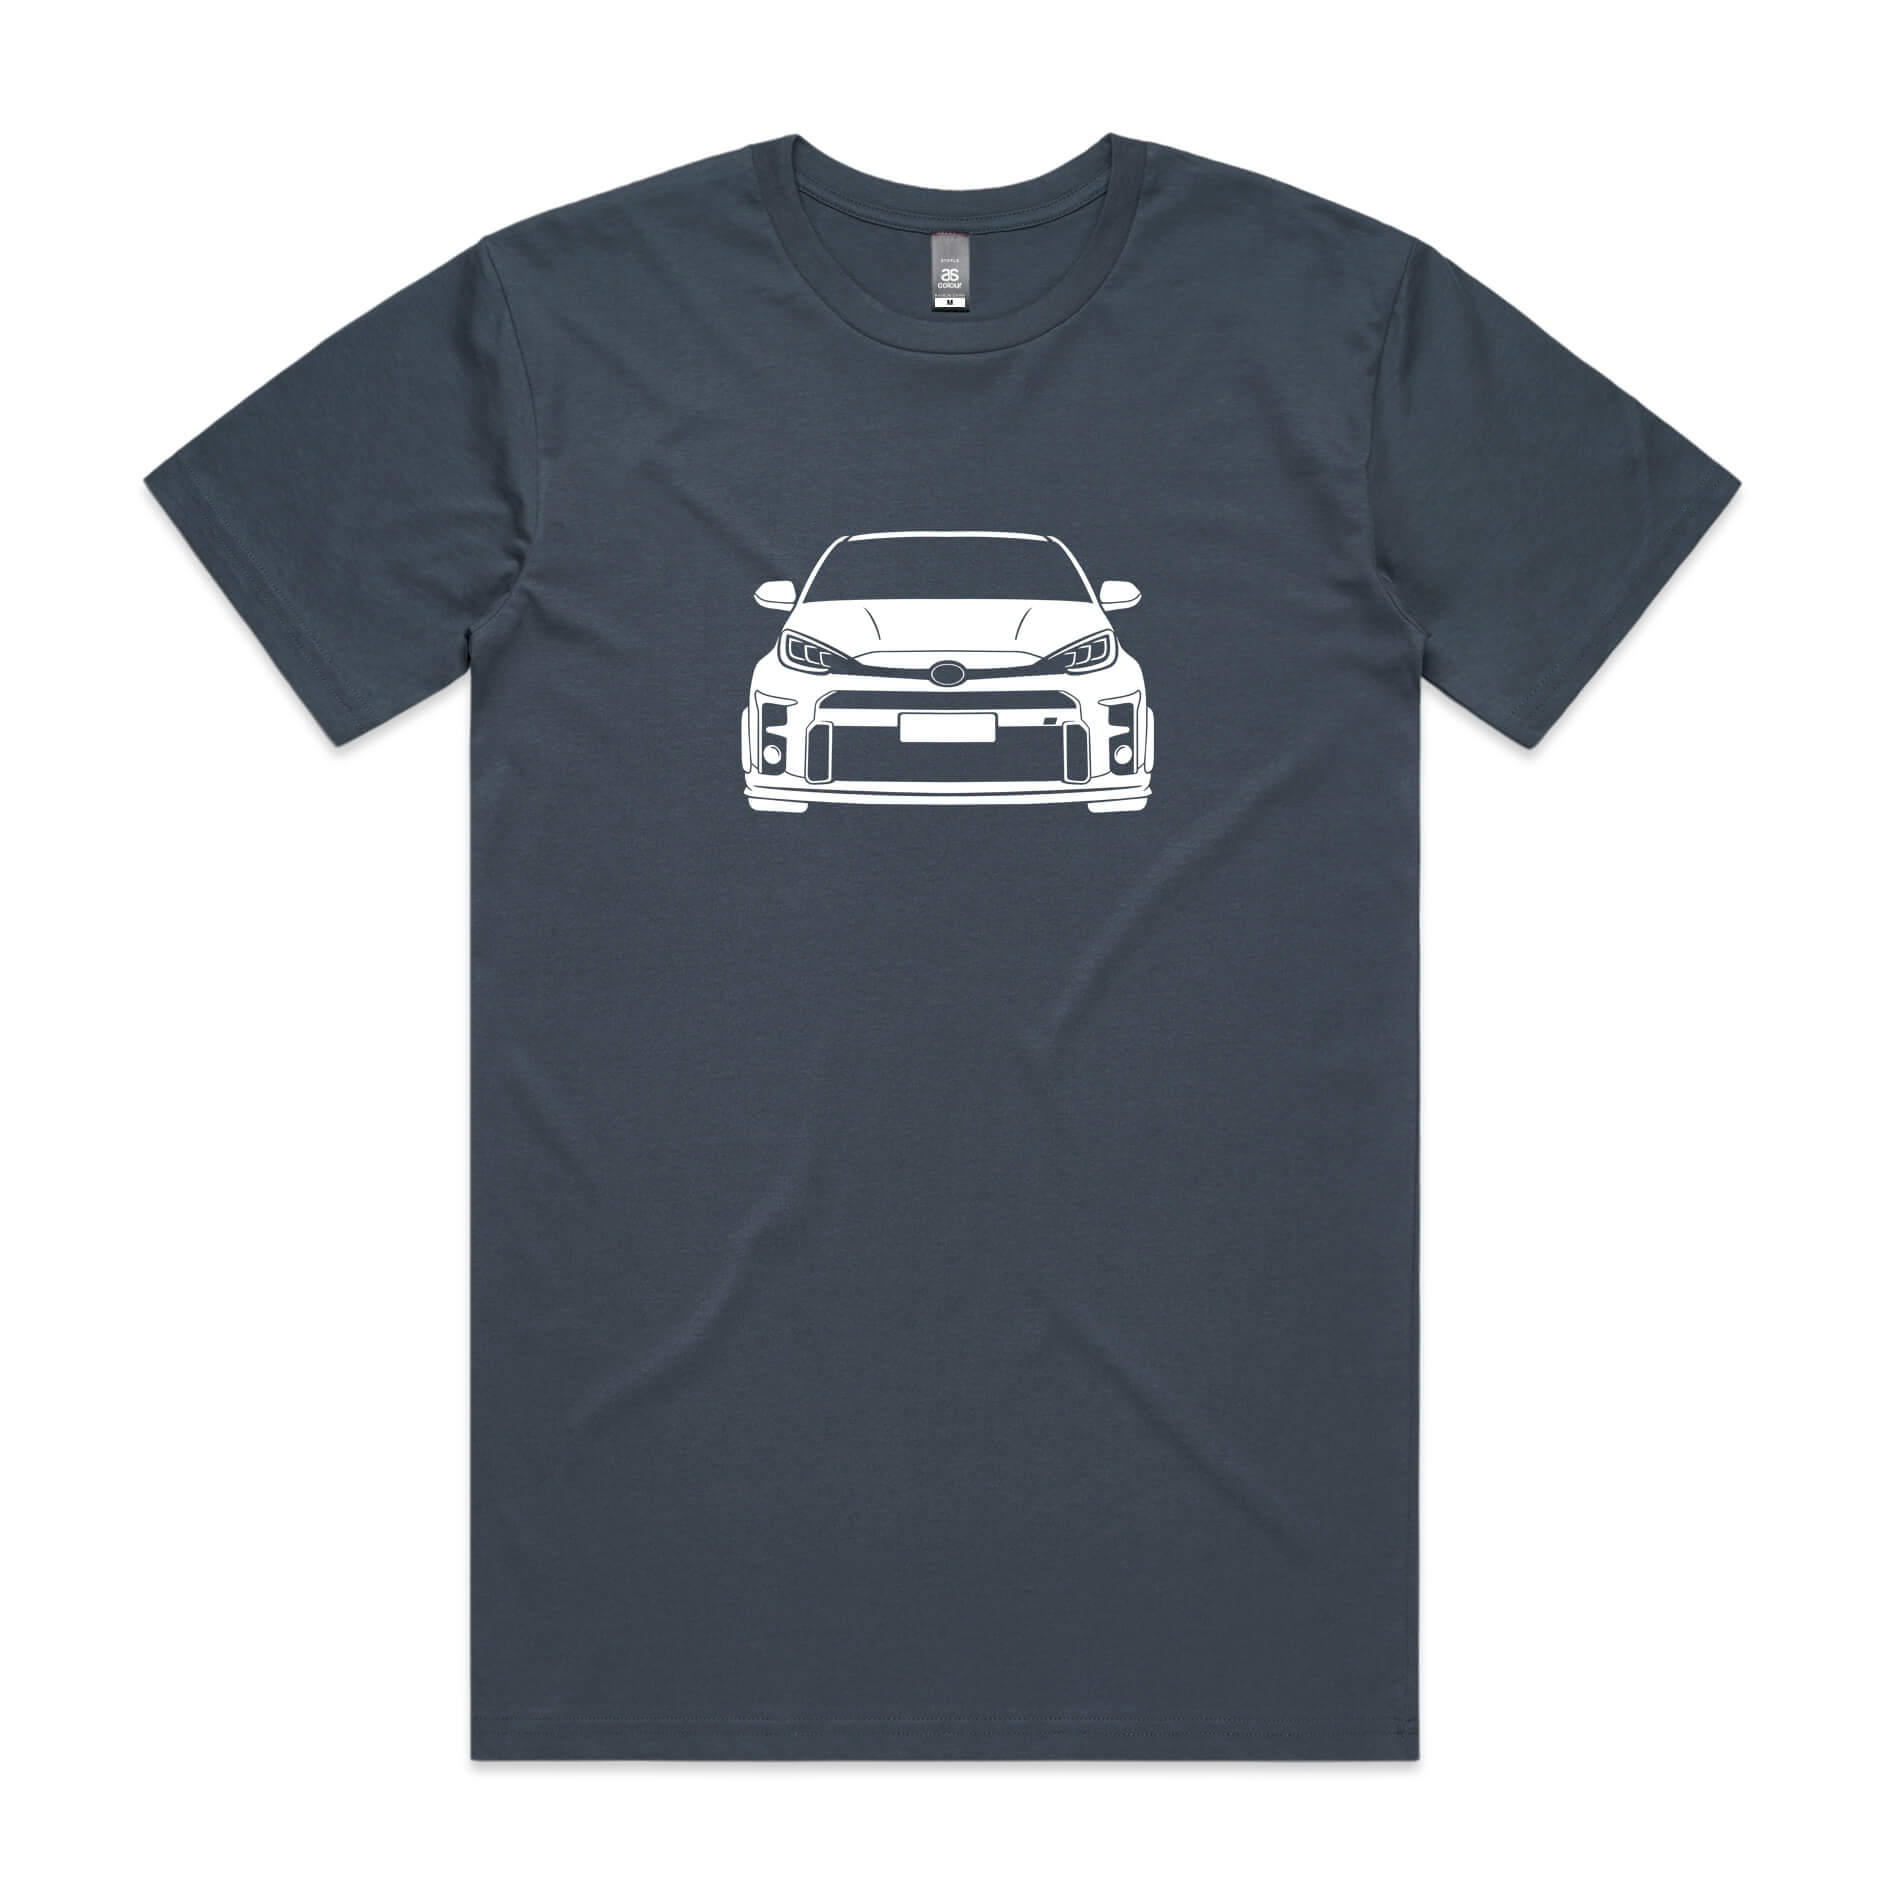 Toyota GR Yaris t-shirt in petrol blue